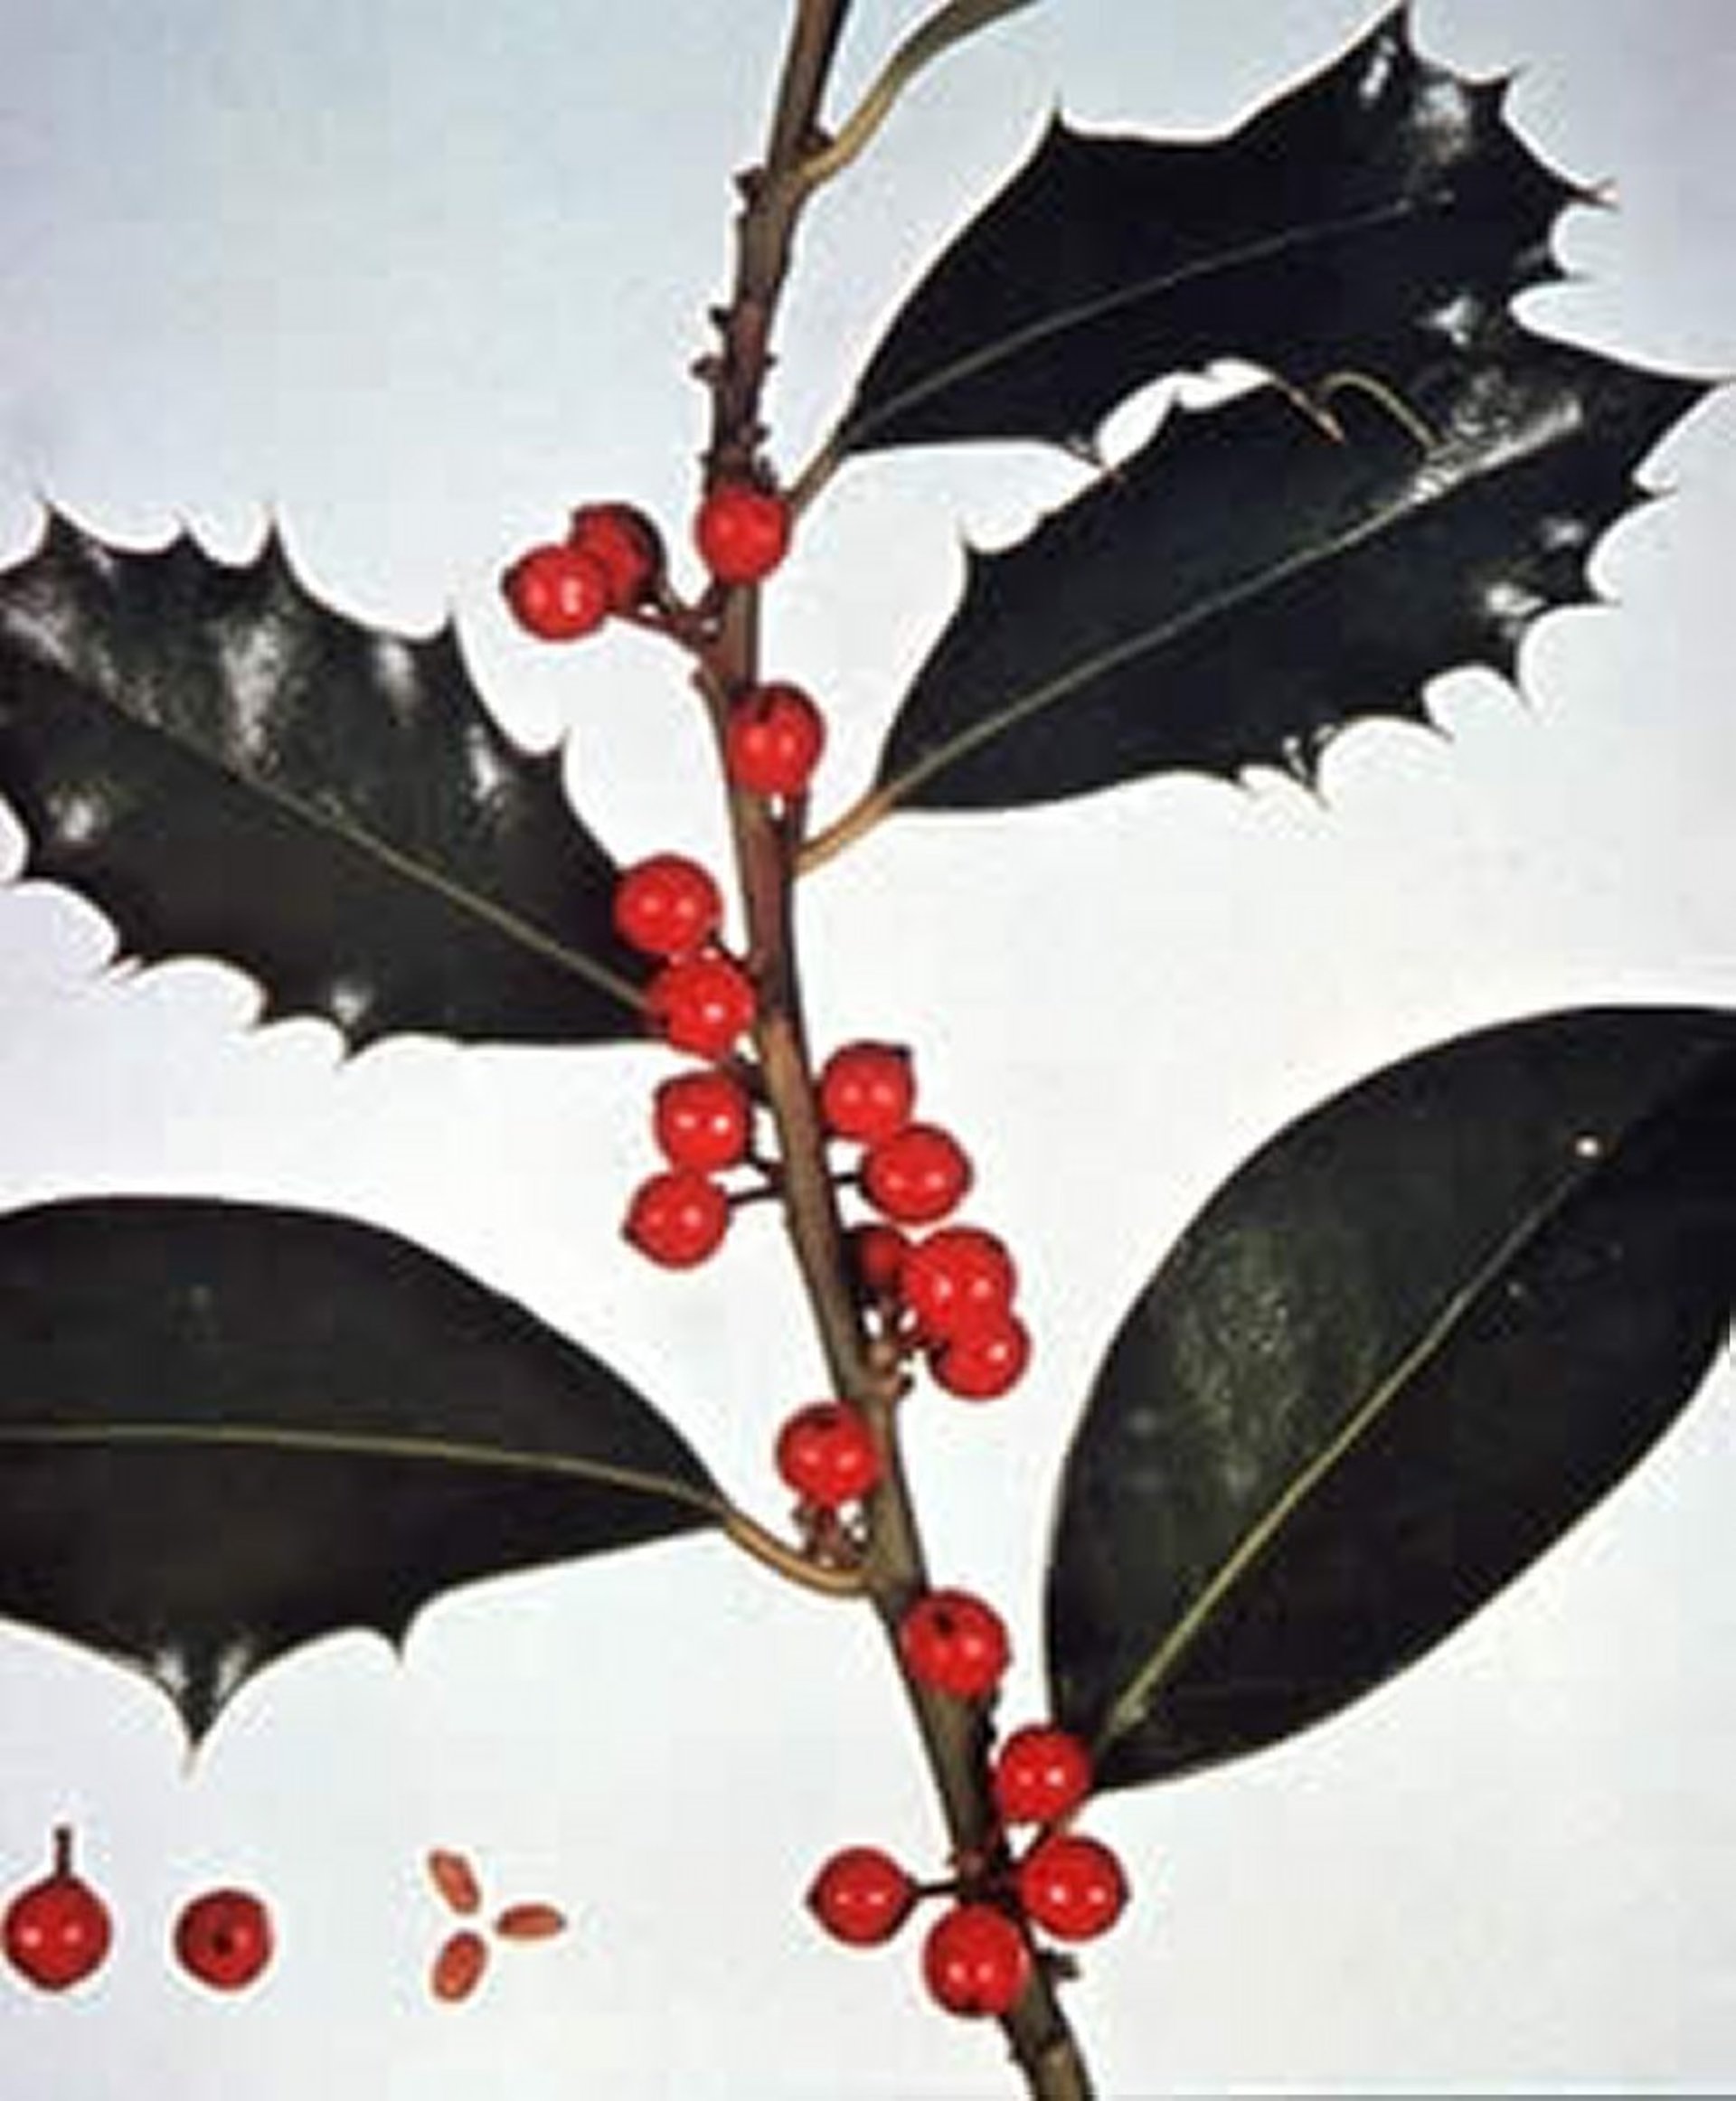 Ilex aquifolium (English holly), branch with berries